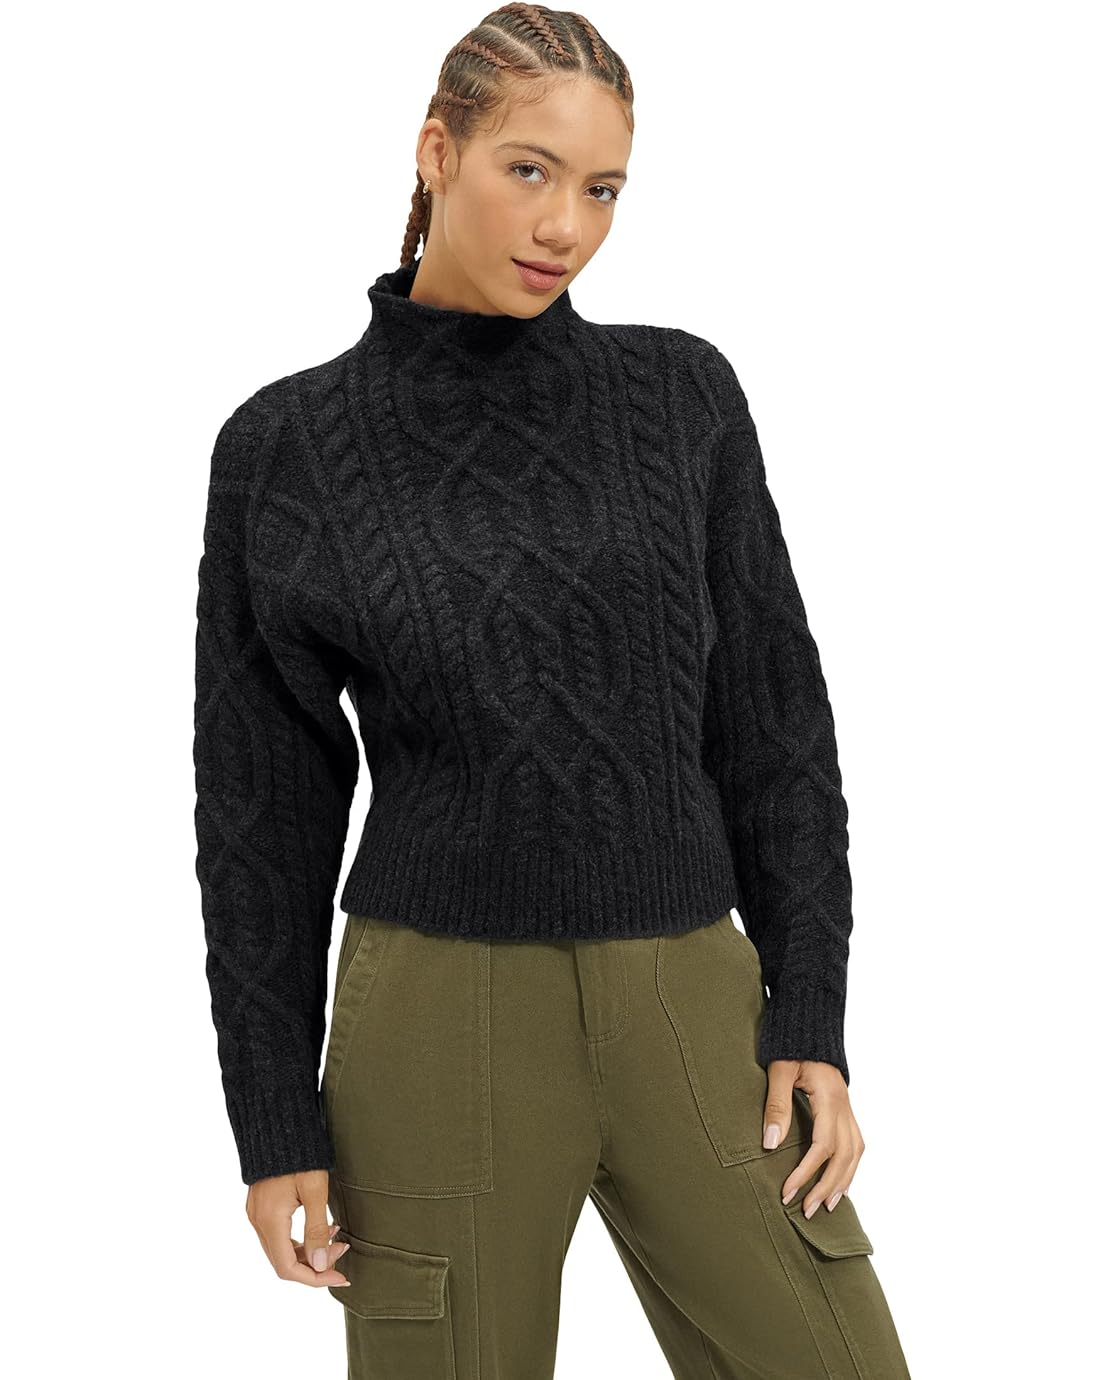 UGG Janae Cable Knit Sweater